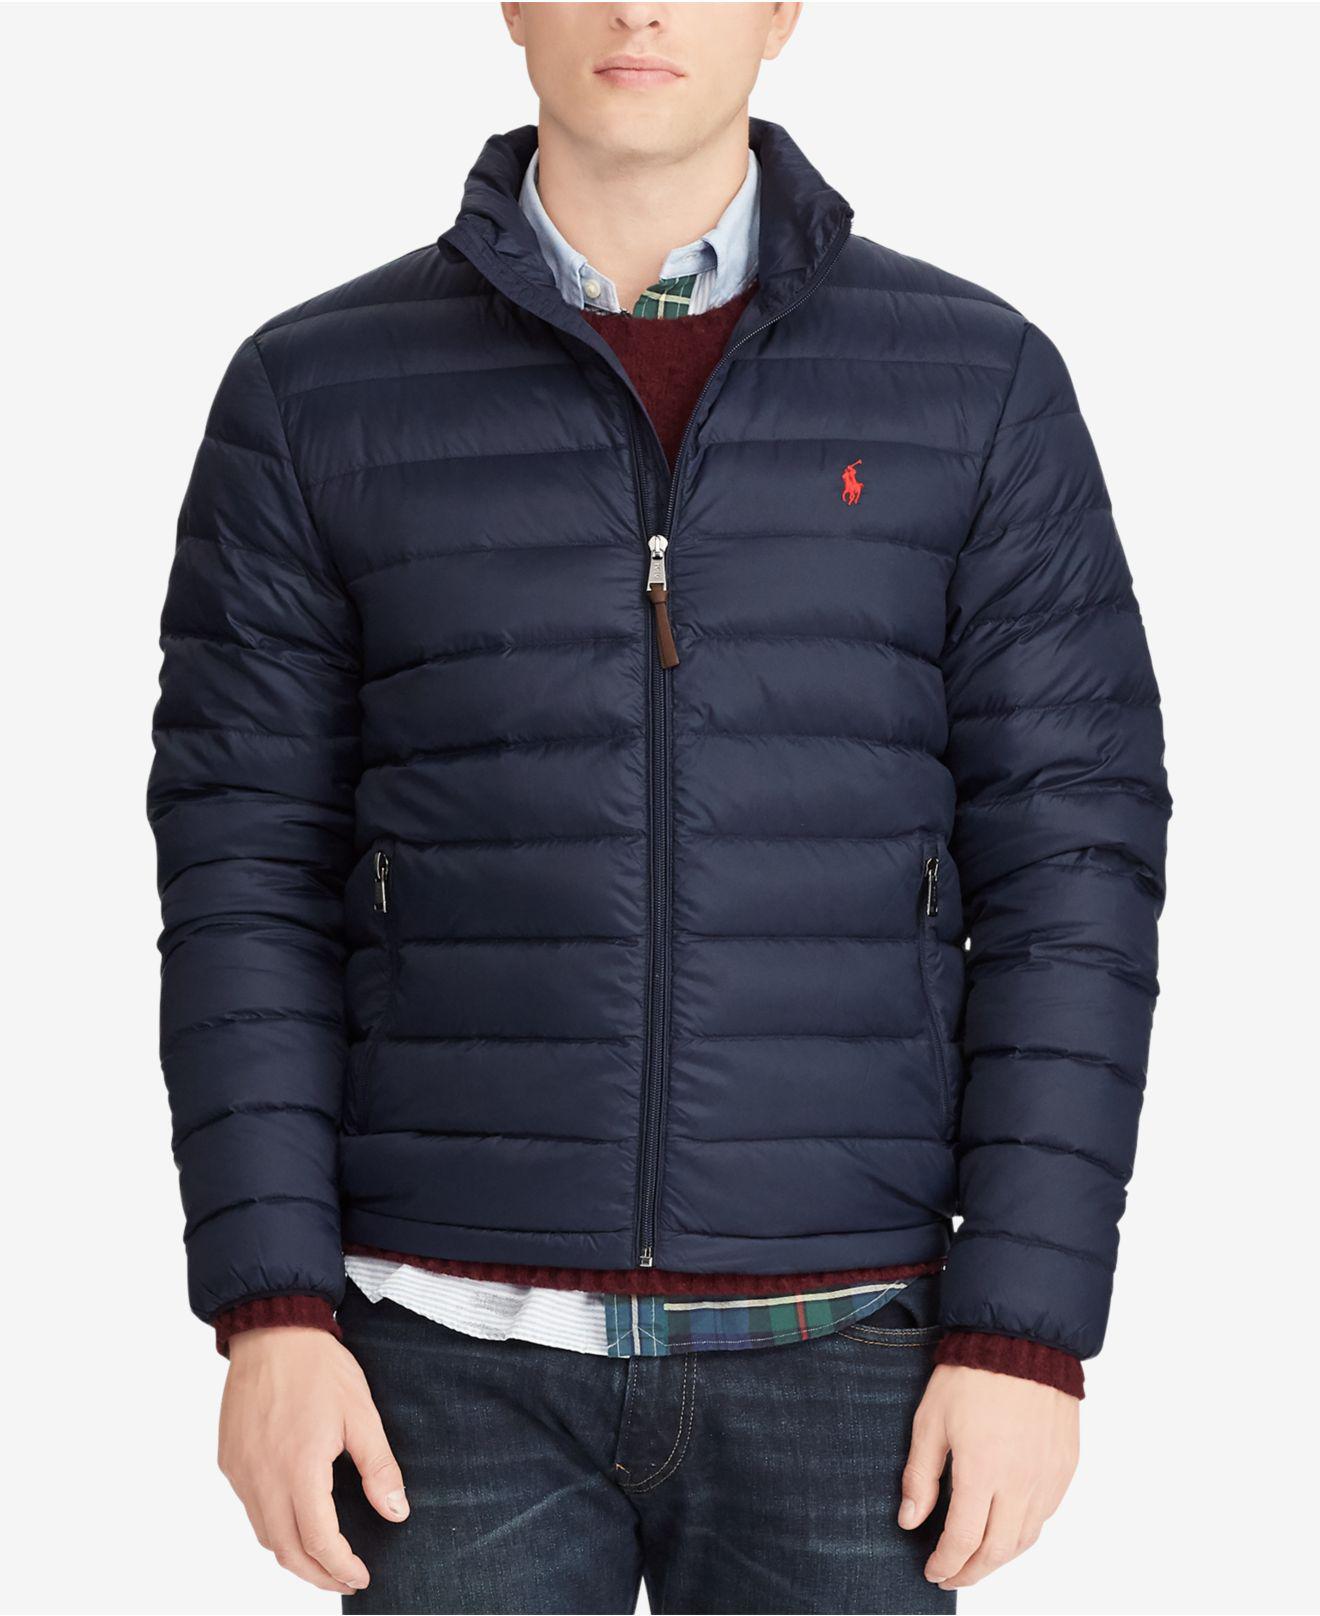 Polo Ralph Lauren Packable Quilted Jacket Deals, SAVE 52% - mpgc.net